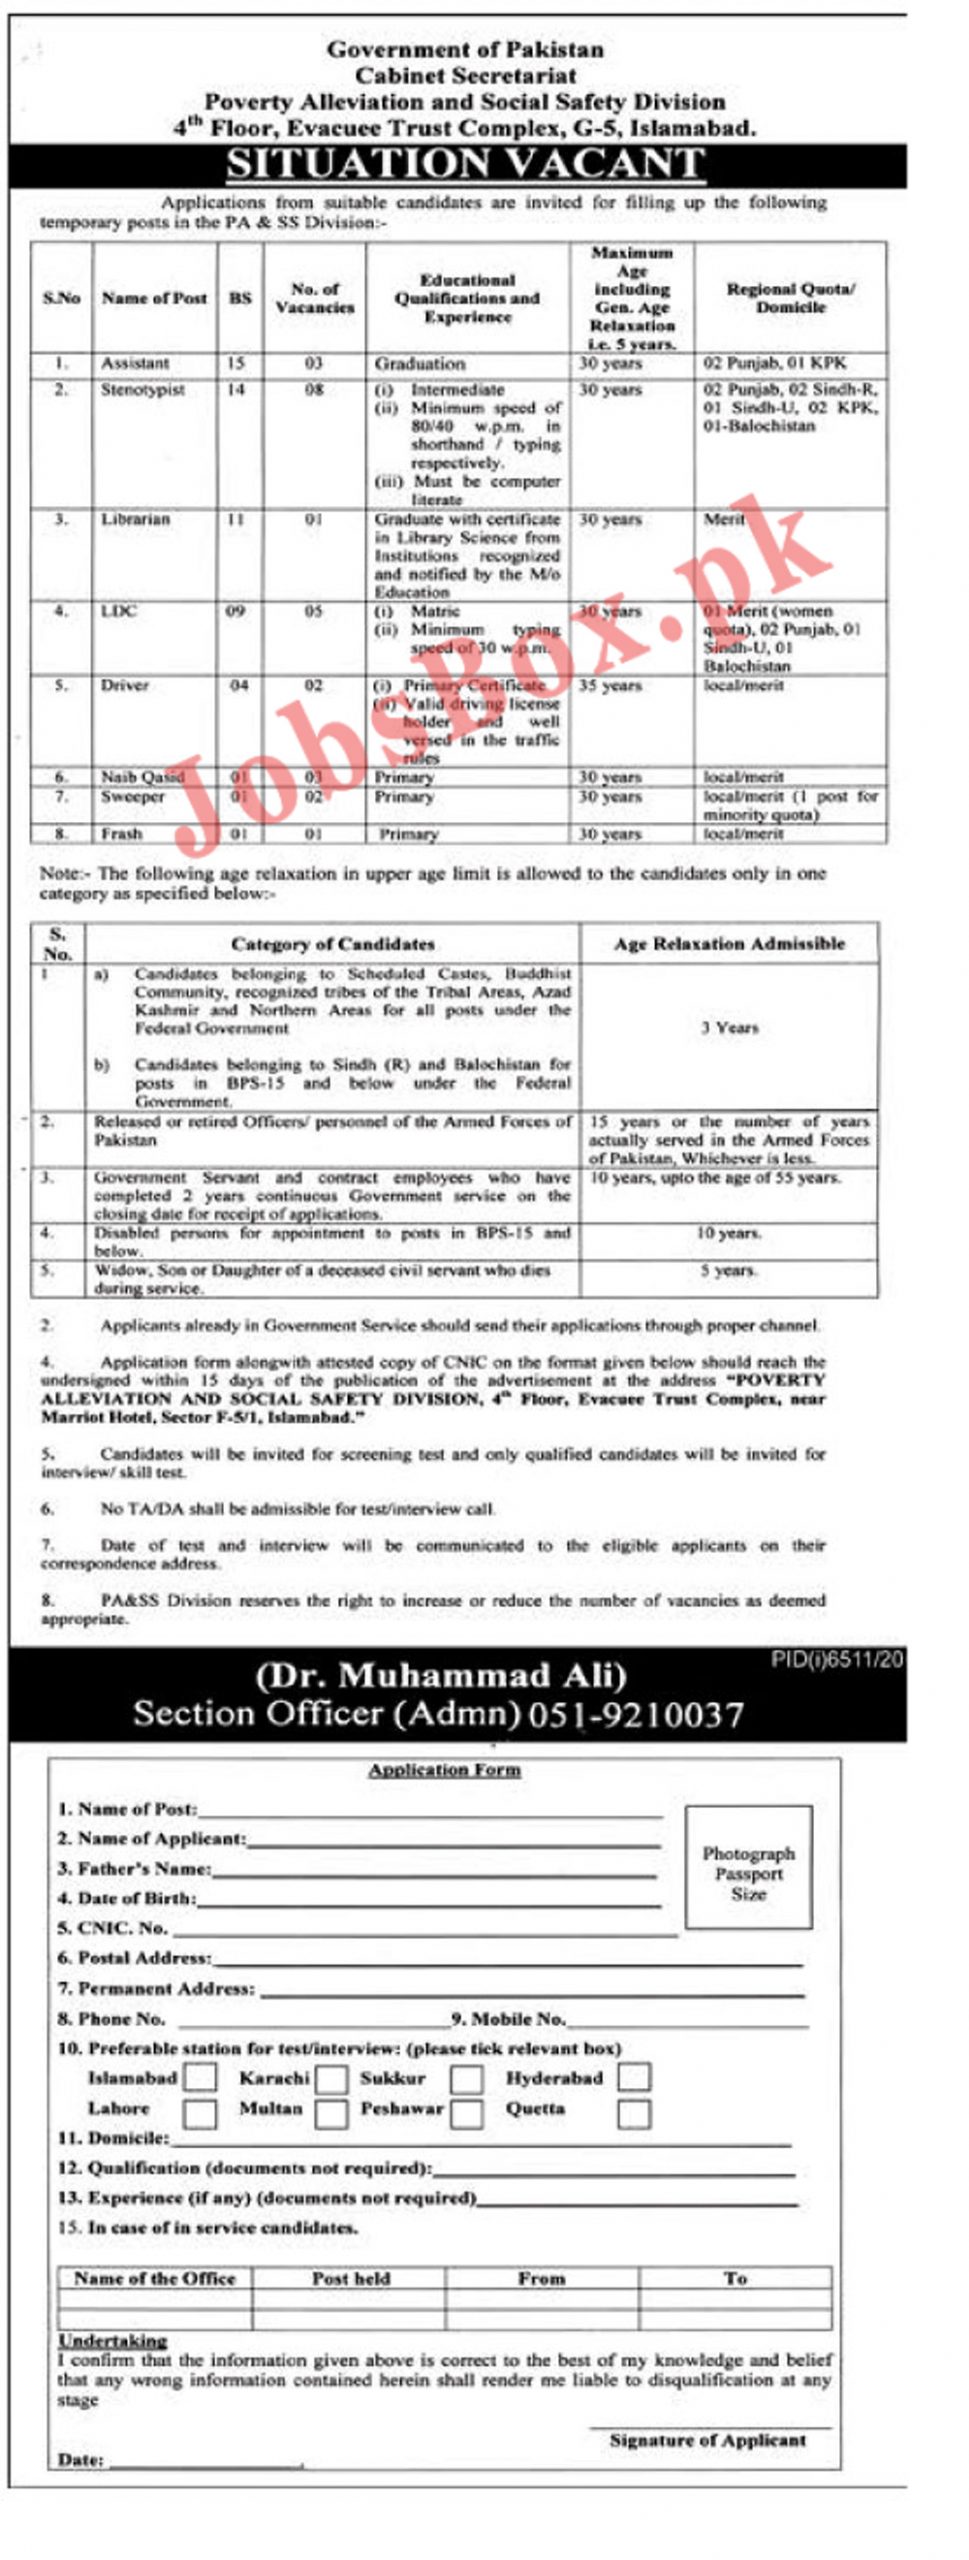 Cabinet Secretariat Islamabad Jobs 2021 - Application Form